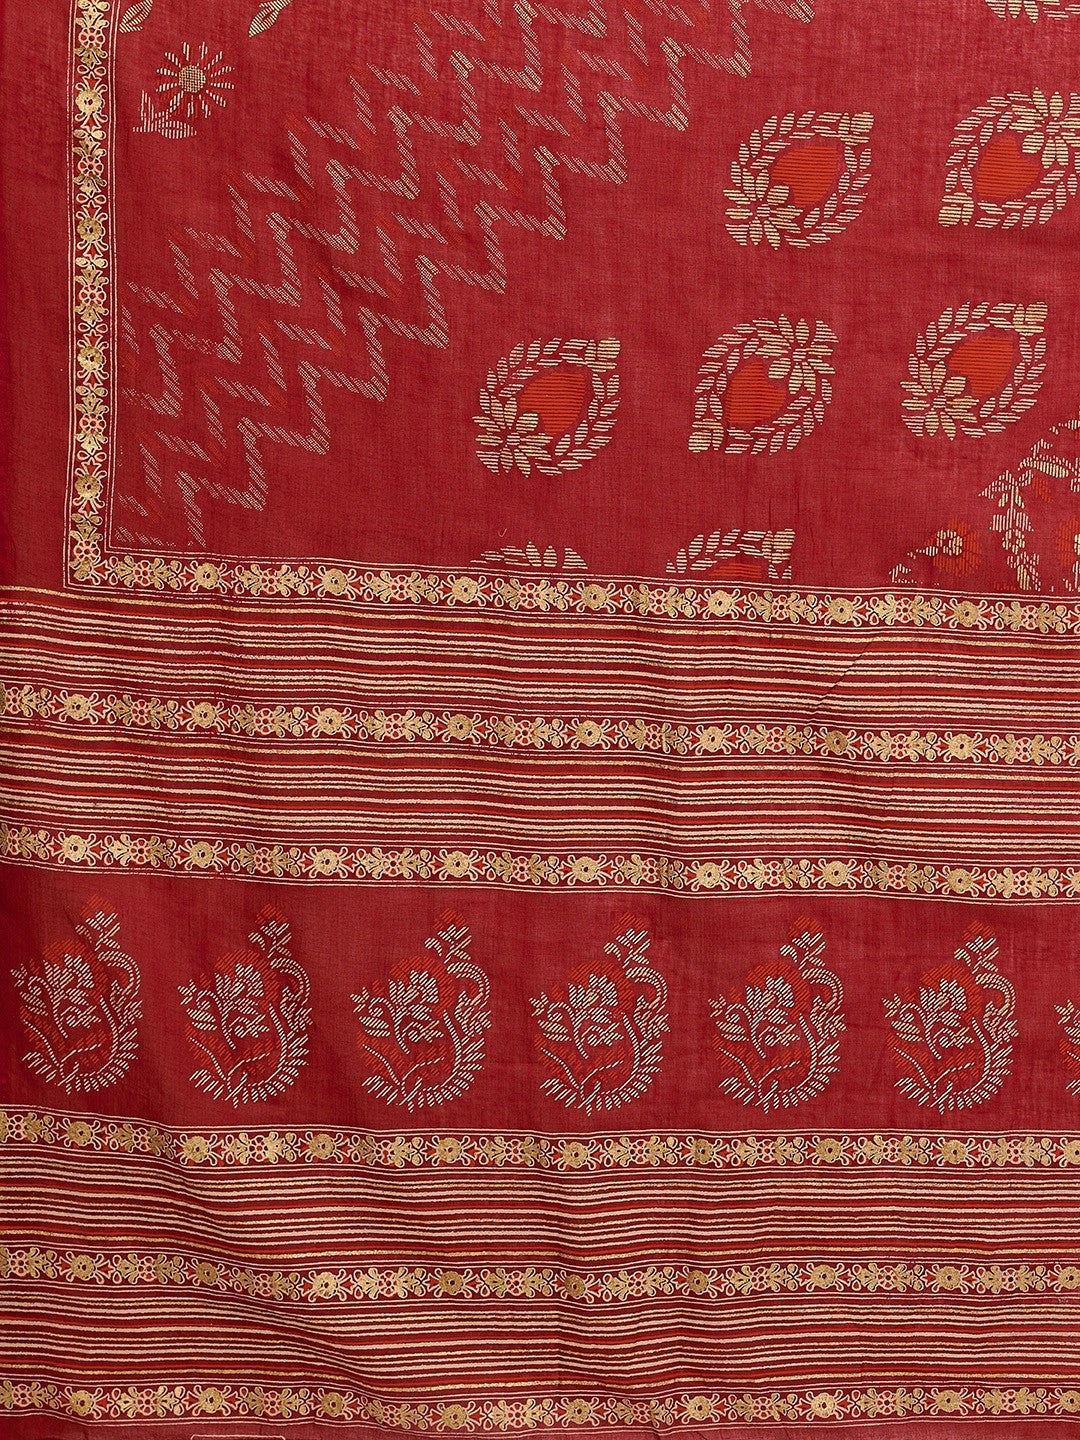 Red Embroidered Anarkali Cotton Kurta Set